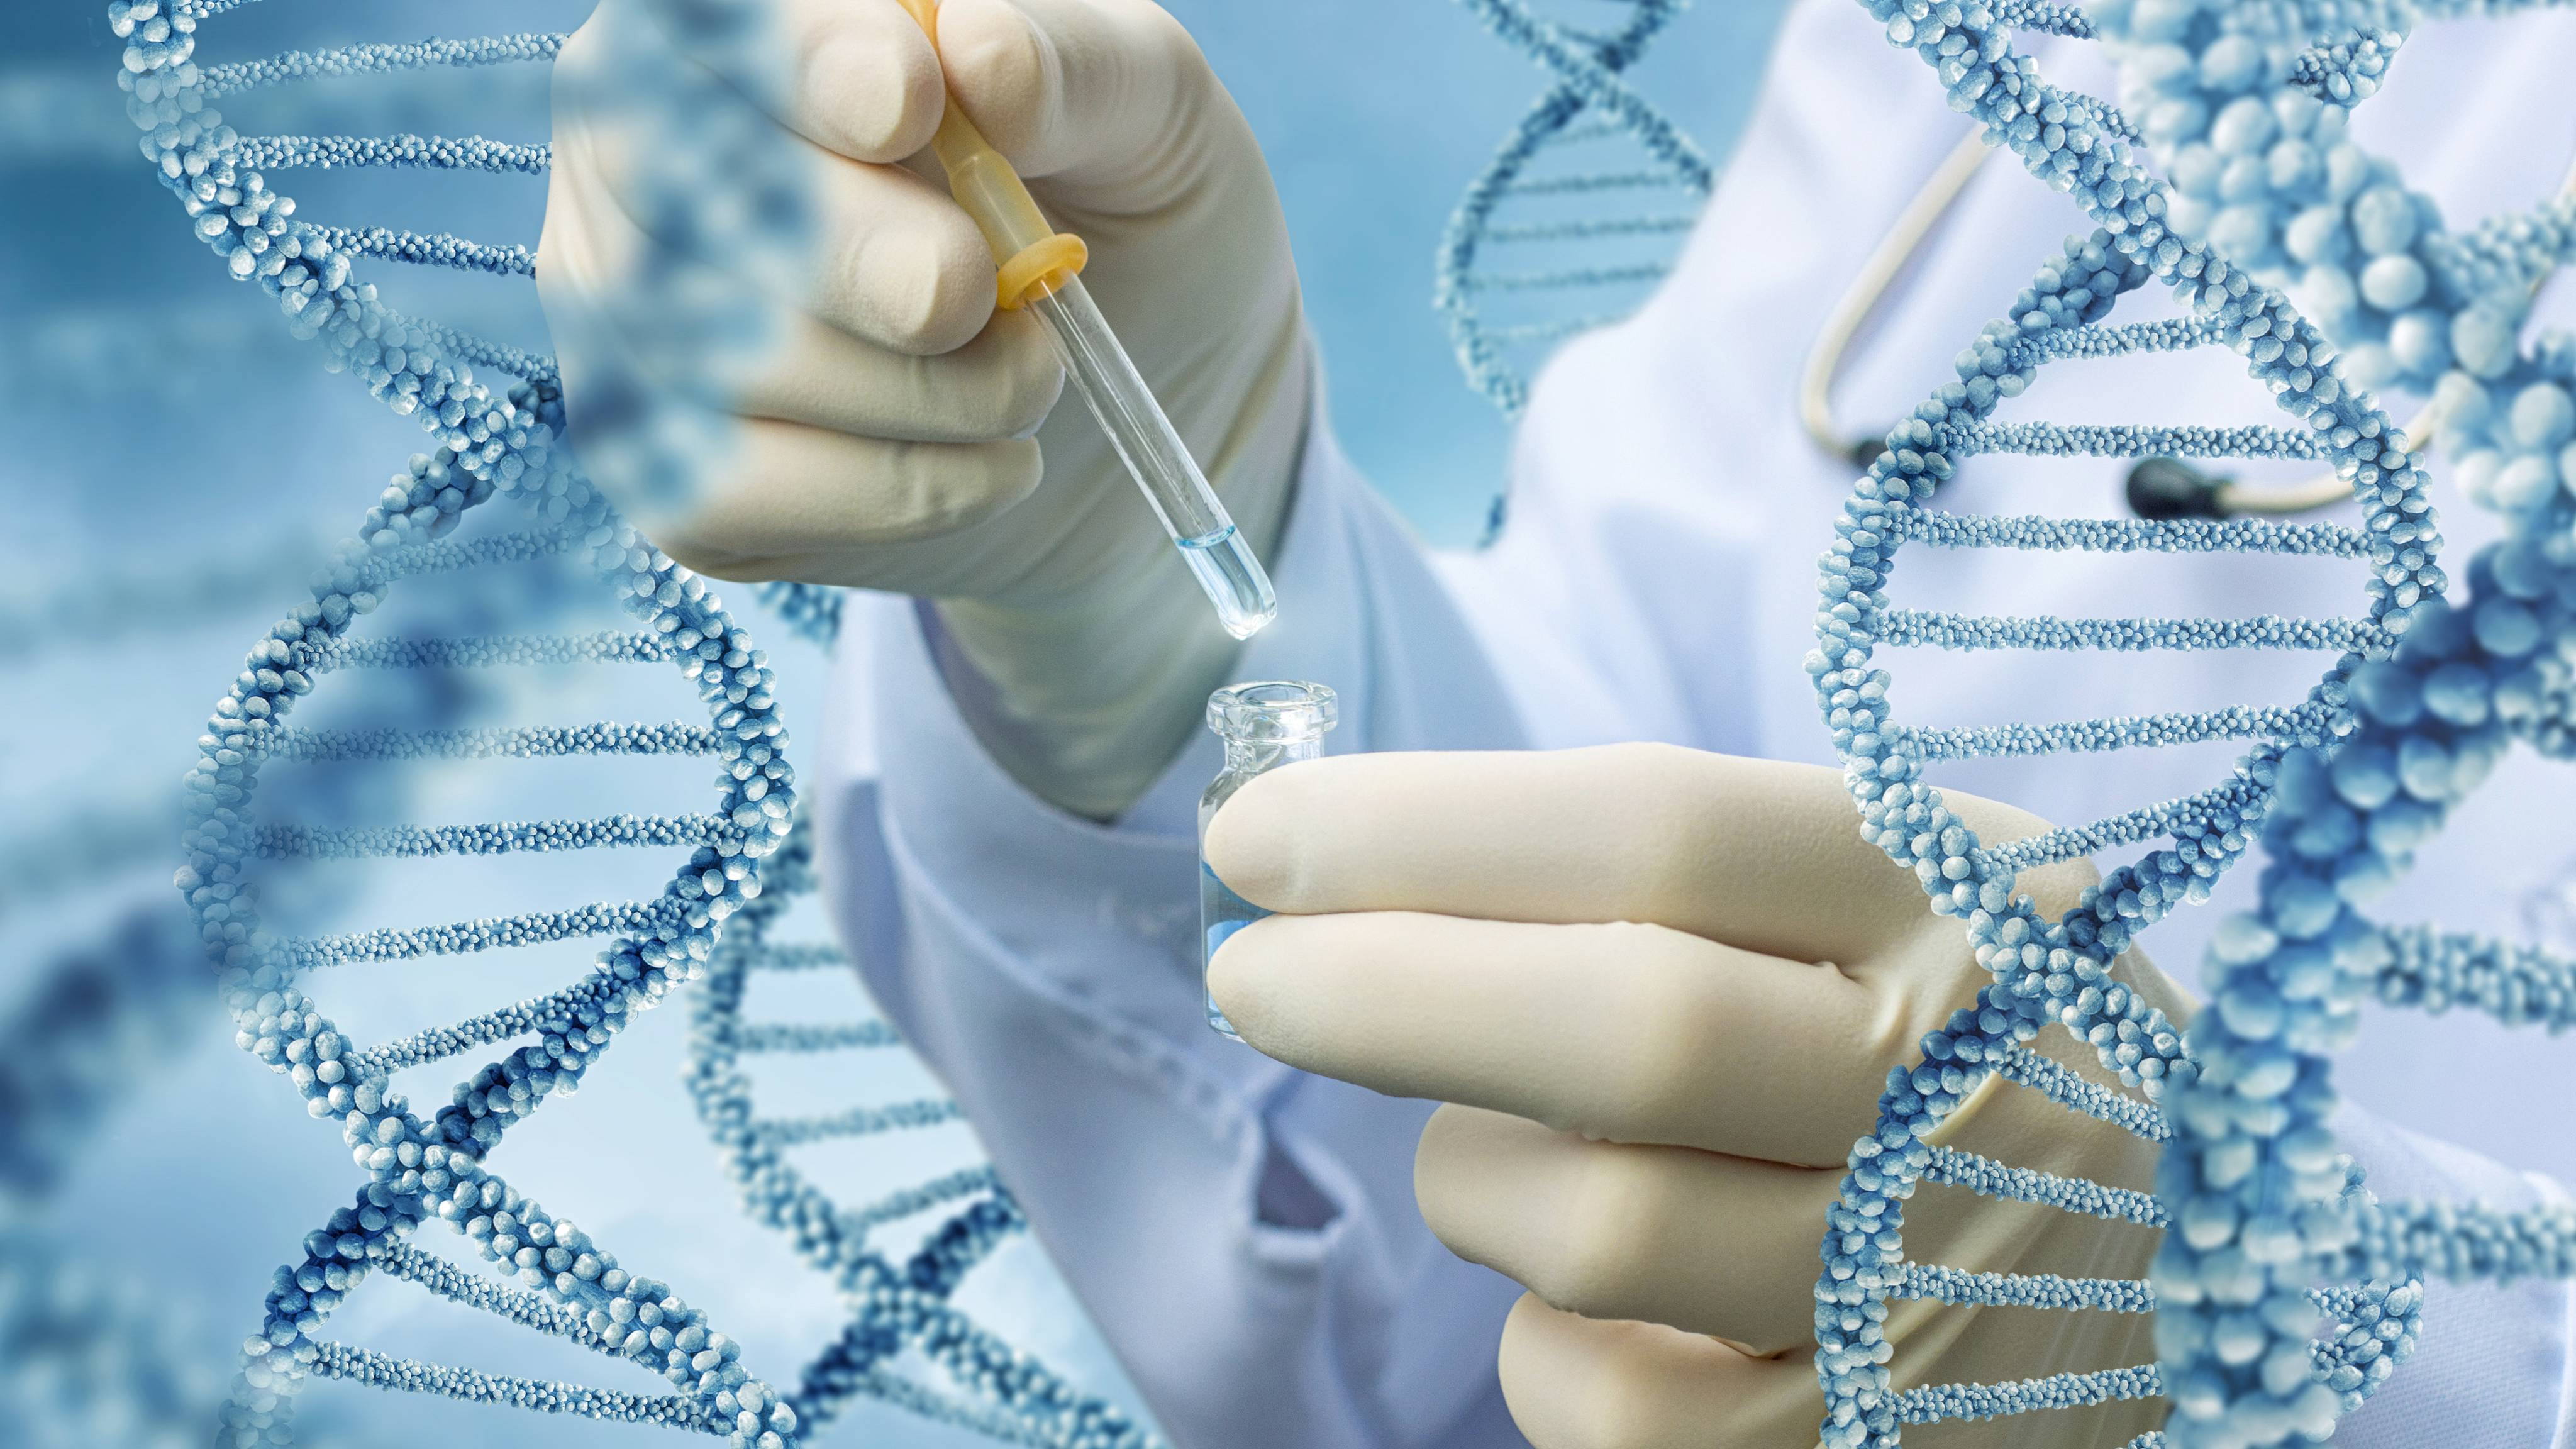 genetic studies in research